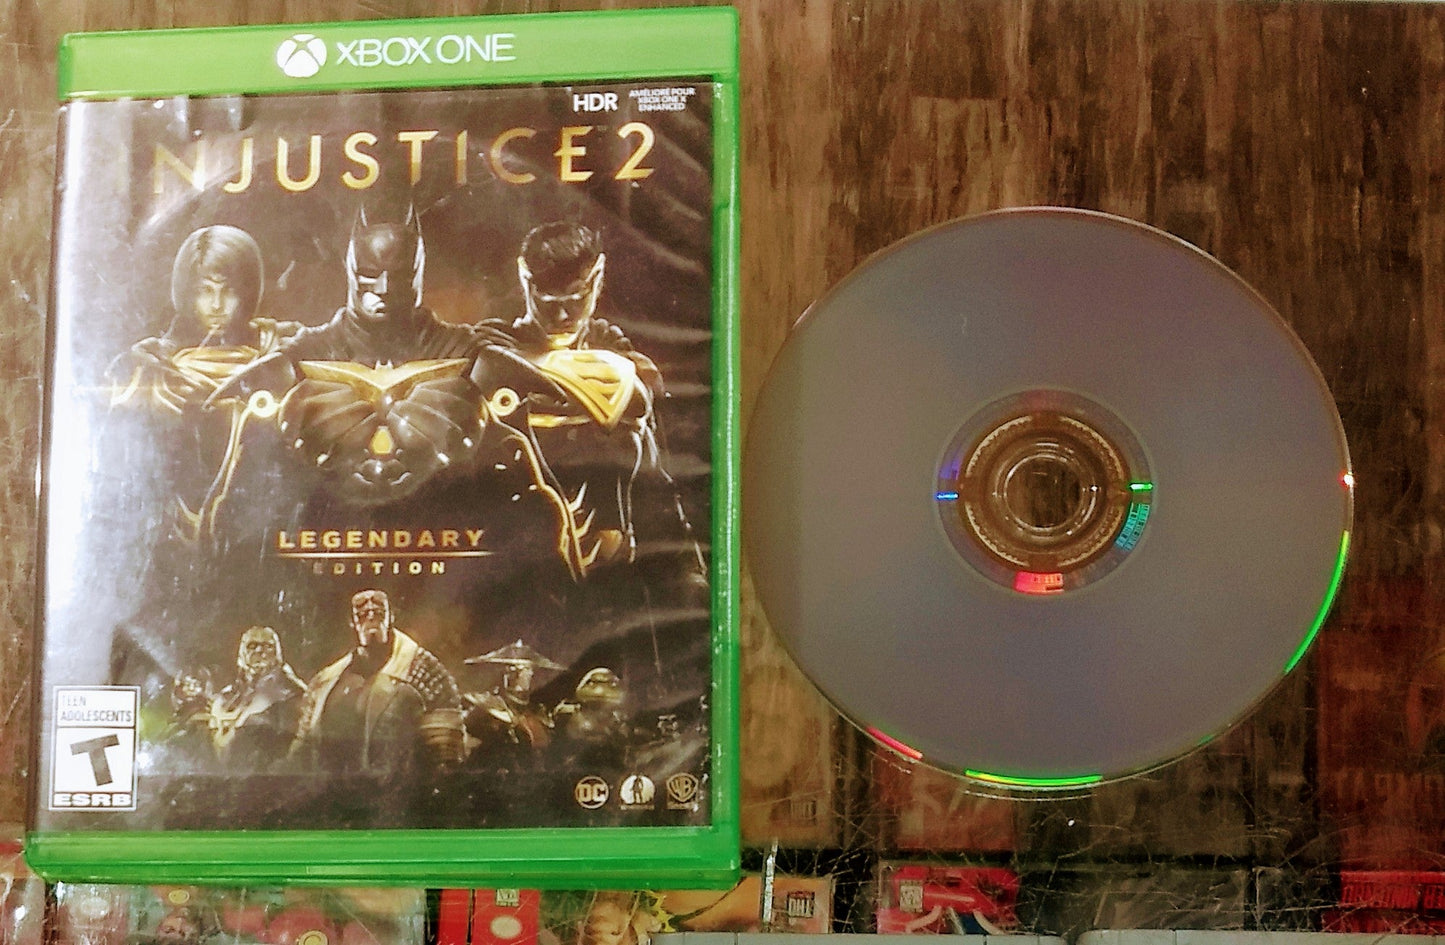 INJUSTICE 2 (XBOX ONE XONE) - jeux video game-x